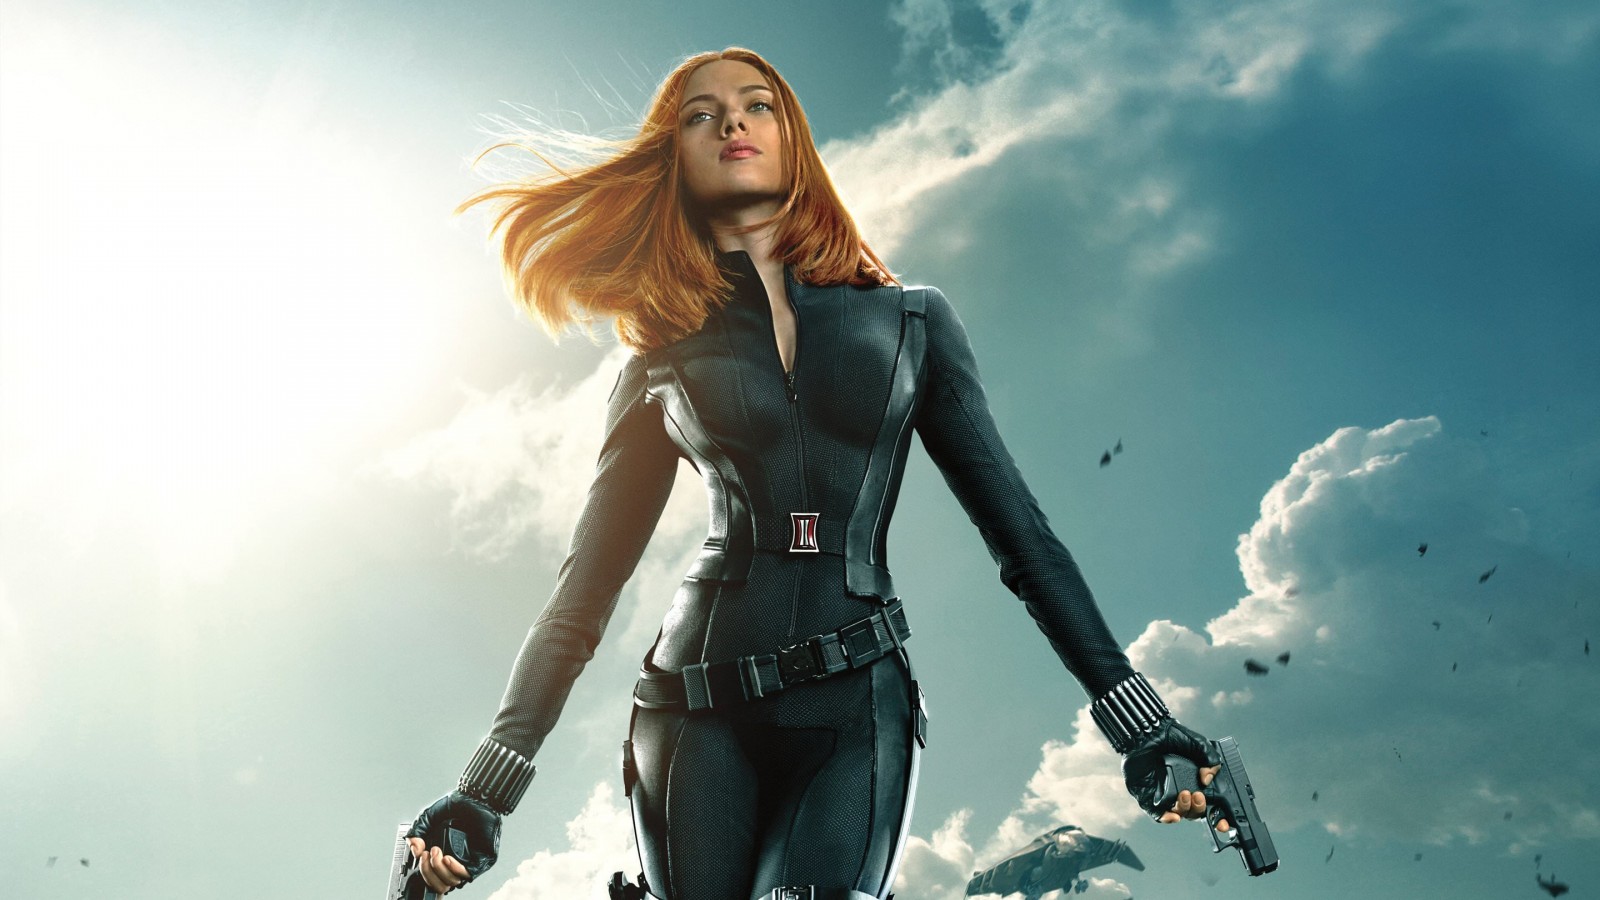 Scarlett Johansson in "Captain America: The Winter Soldier" Wallpaper for Desktop 1600x900